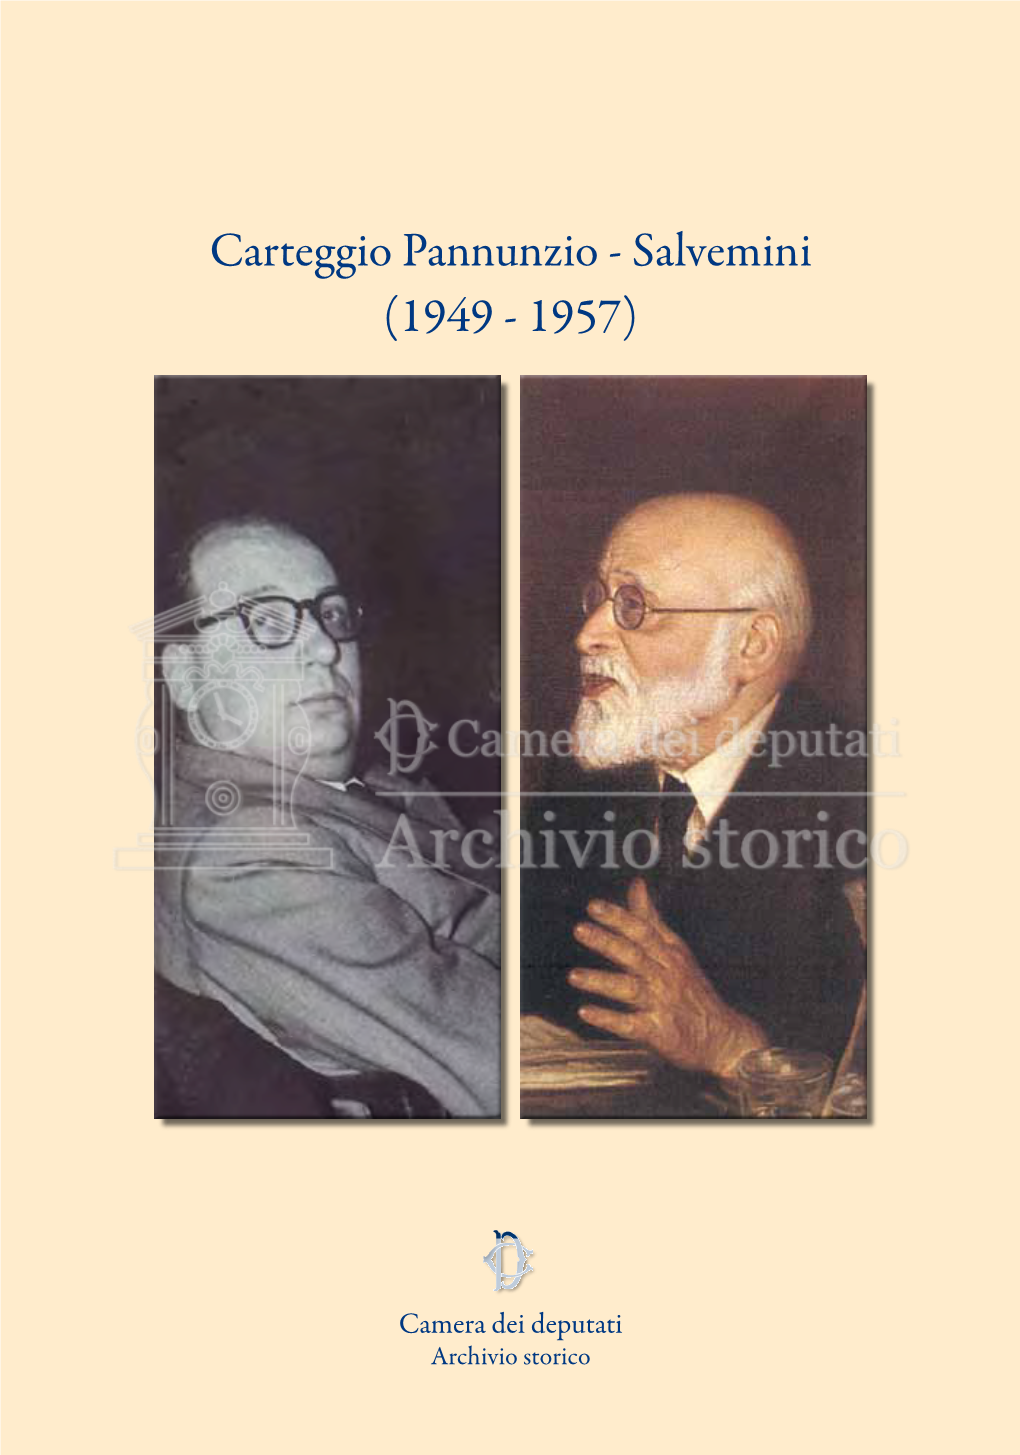 Carteggio Pannunzio - Salvemini (1949 - 1957)